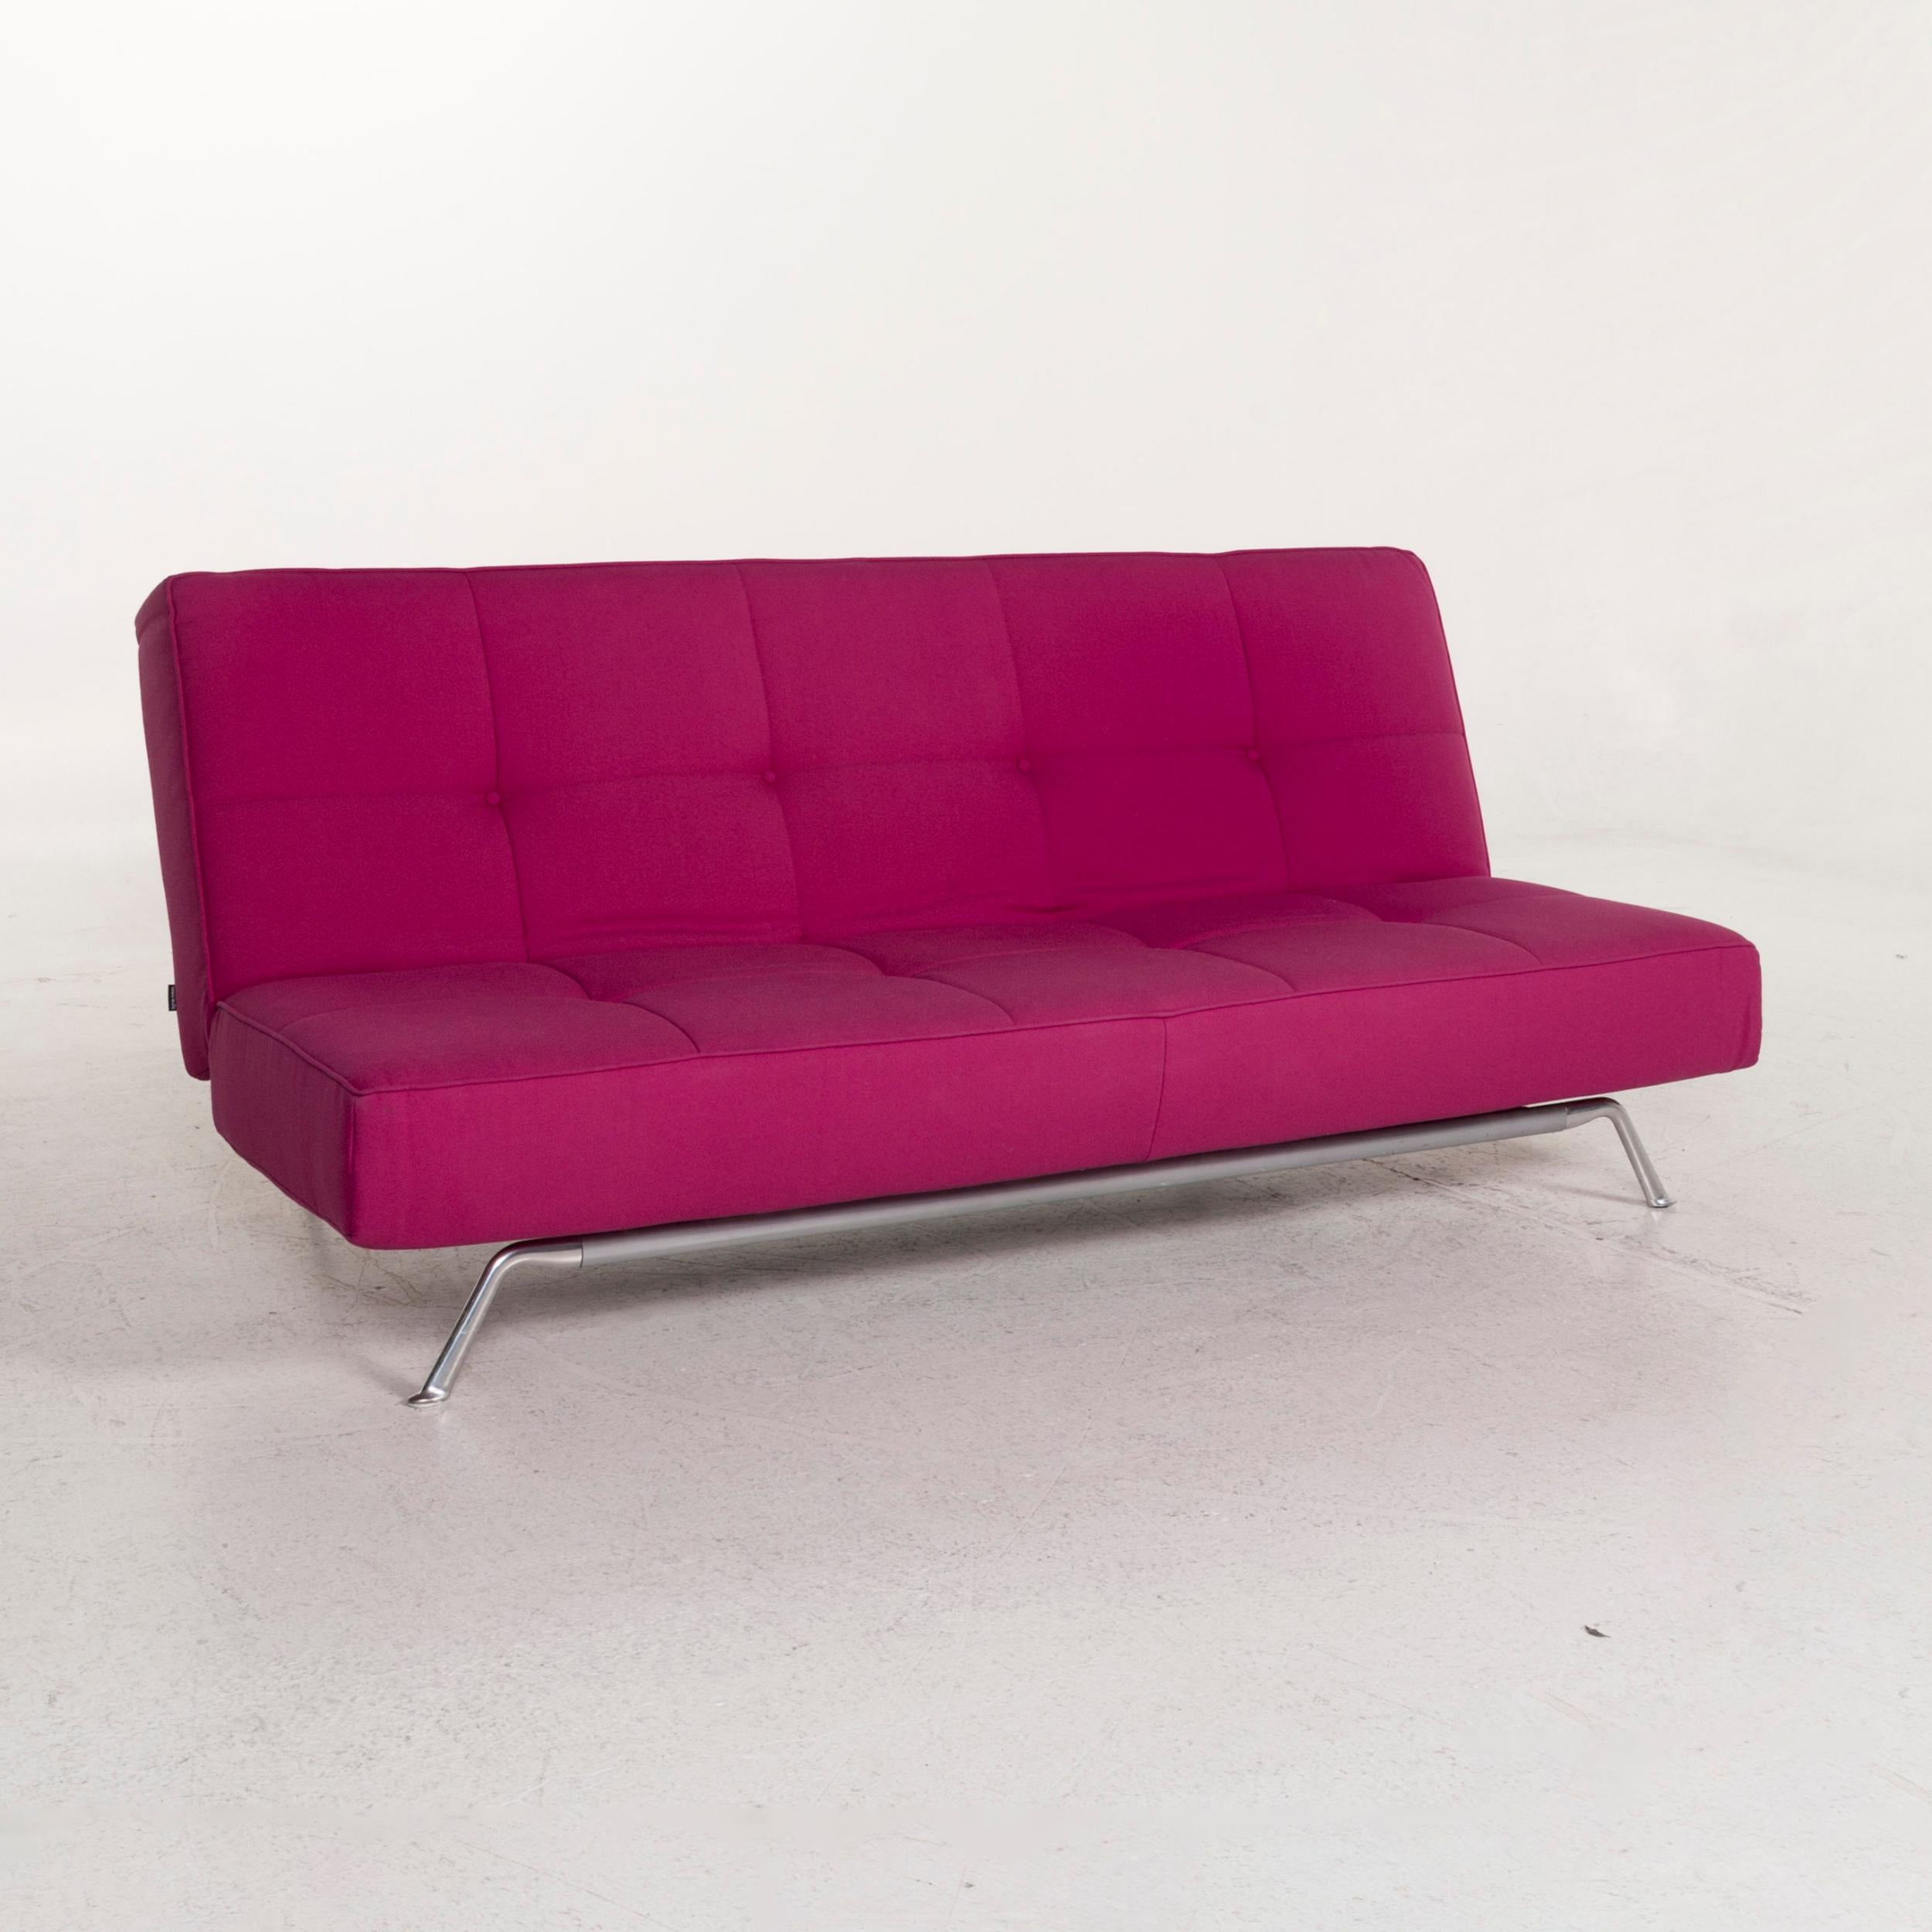 French Ligne Roset Smala Fabric Sofa Pink Three-Seat Sofa Bed Function Sleep